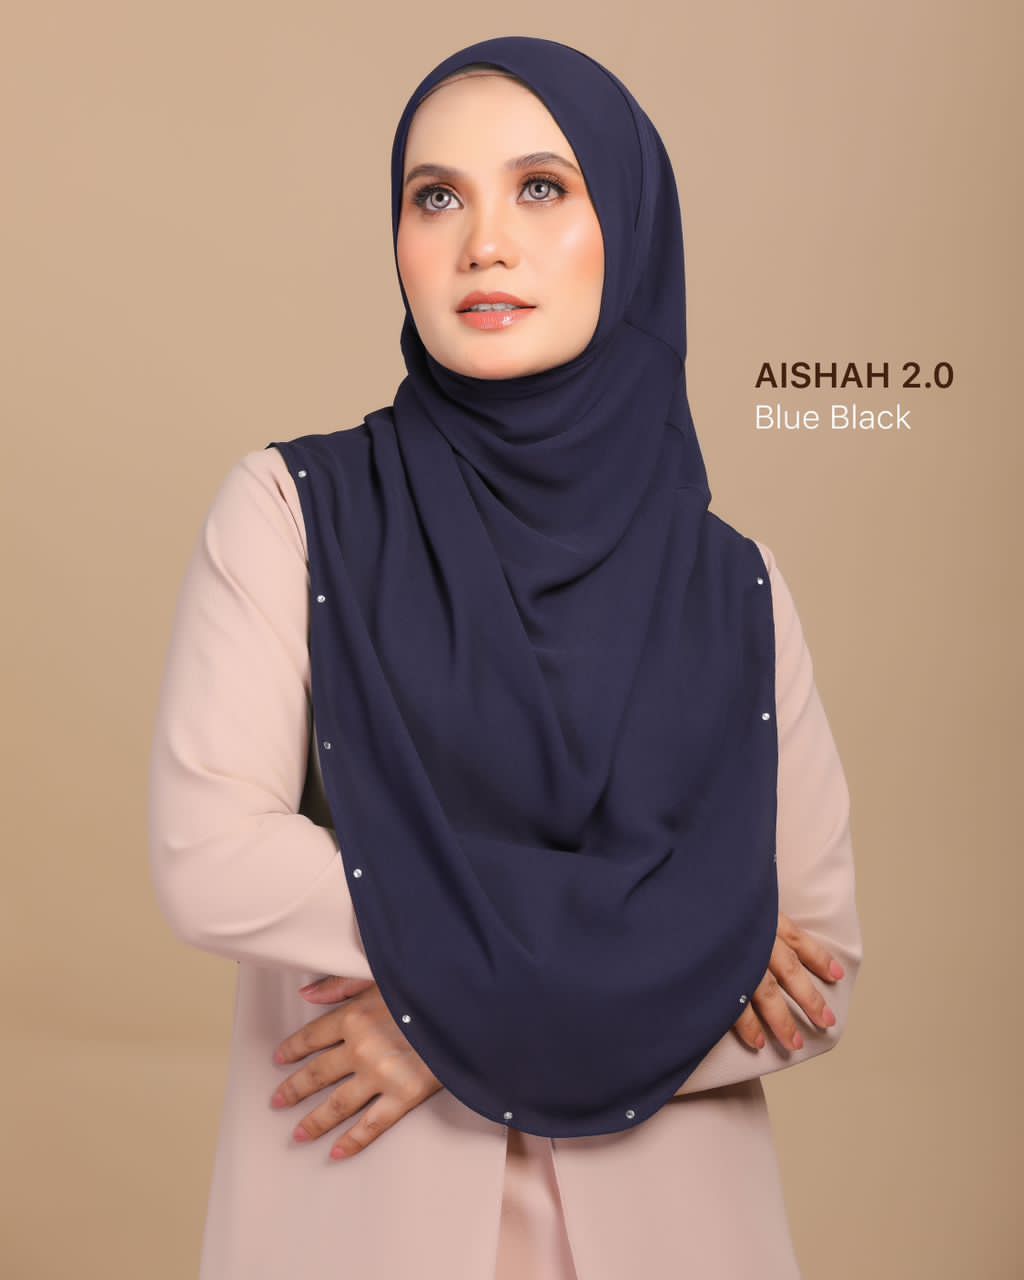 Aishah 2.0 Instant Hijab in Blue Black